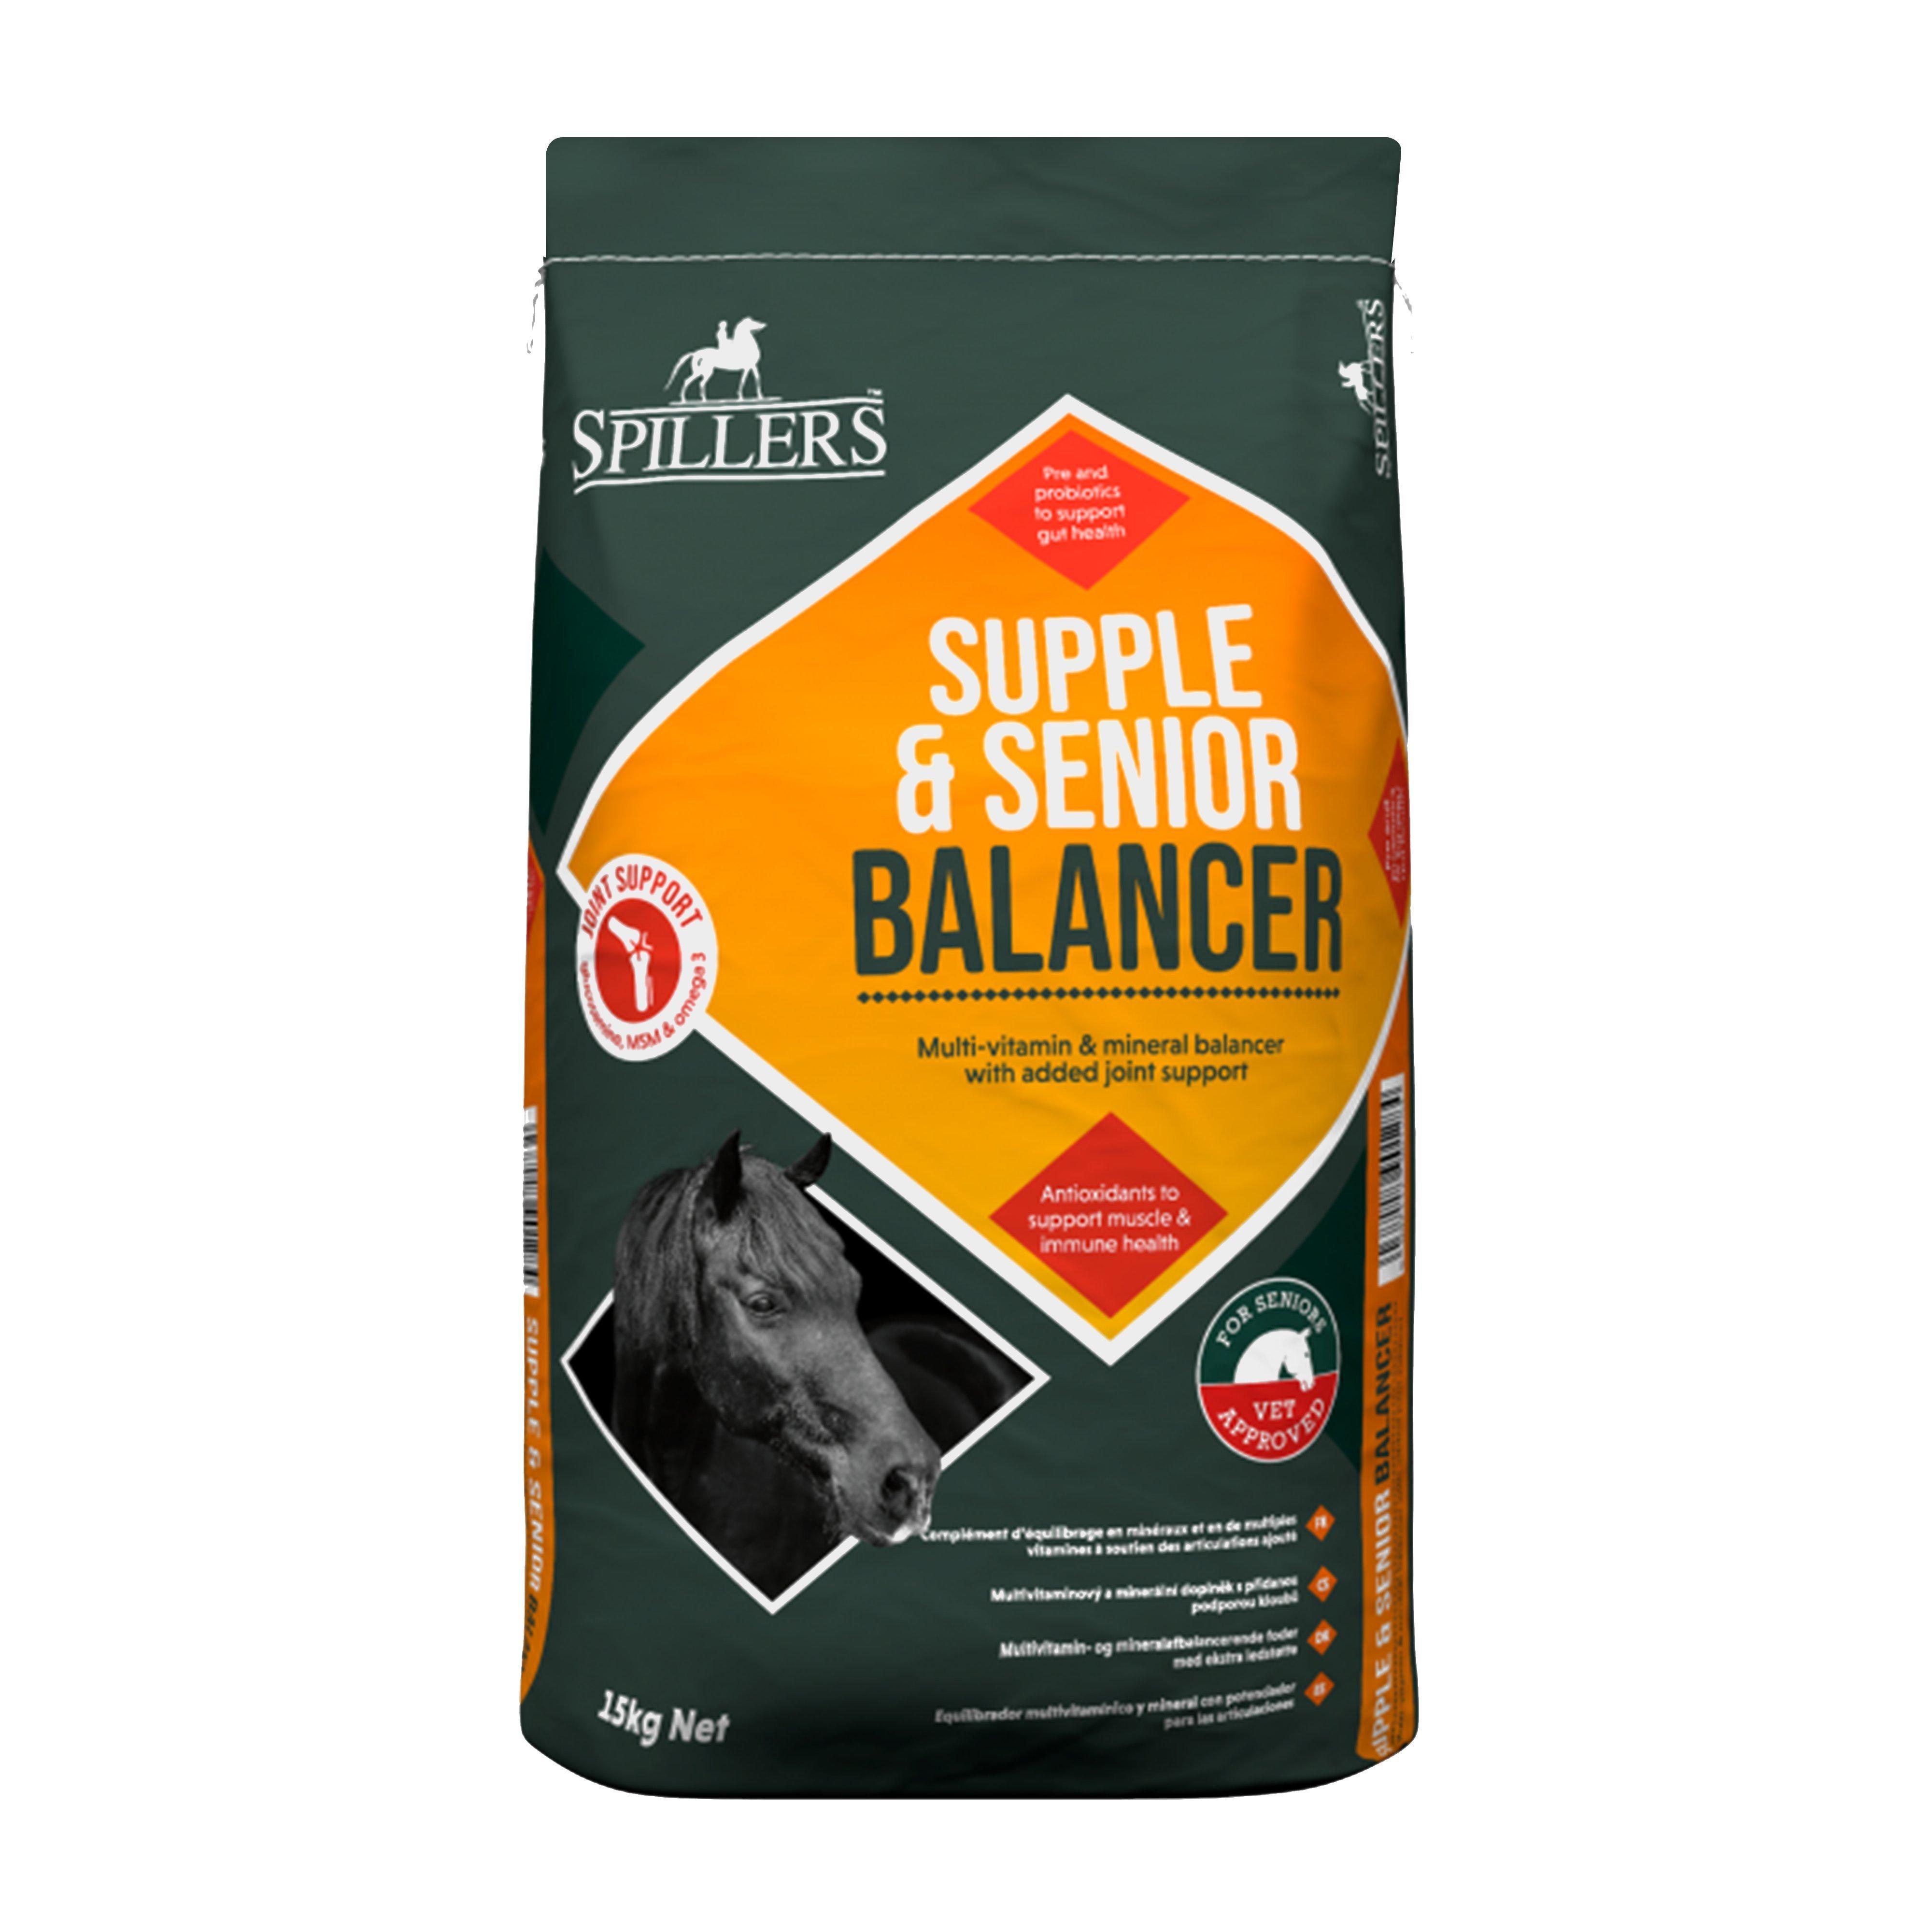 Supple & Senior Balancer